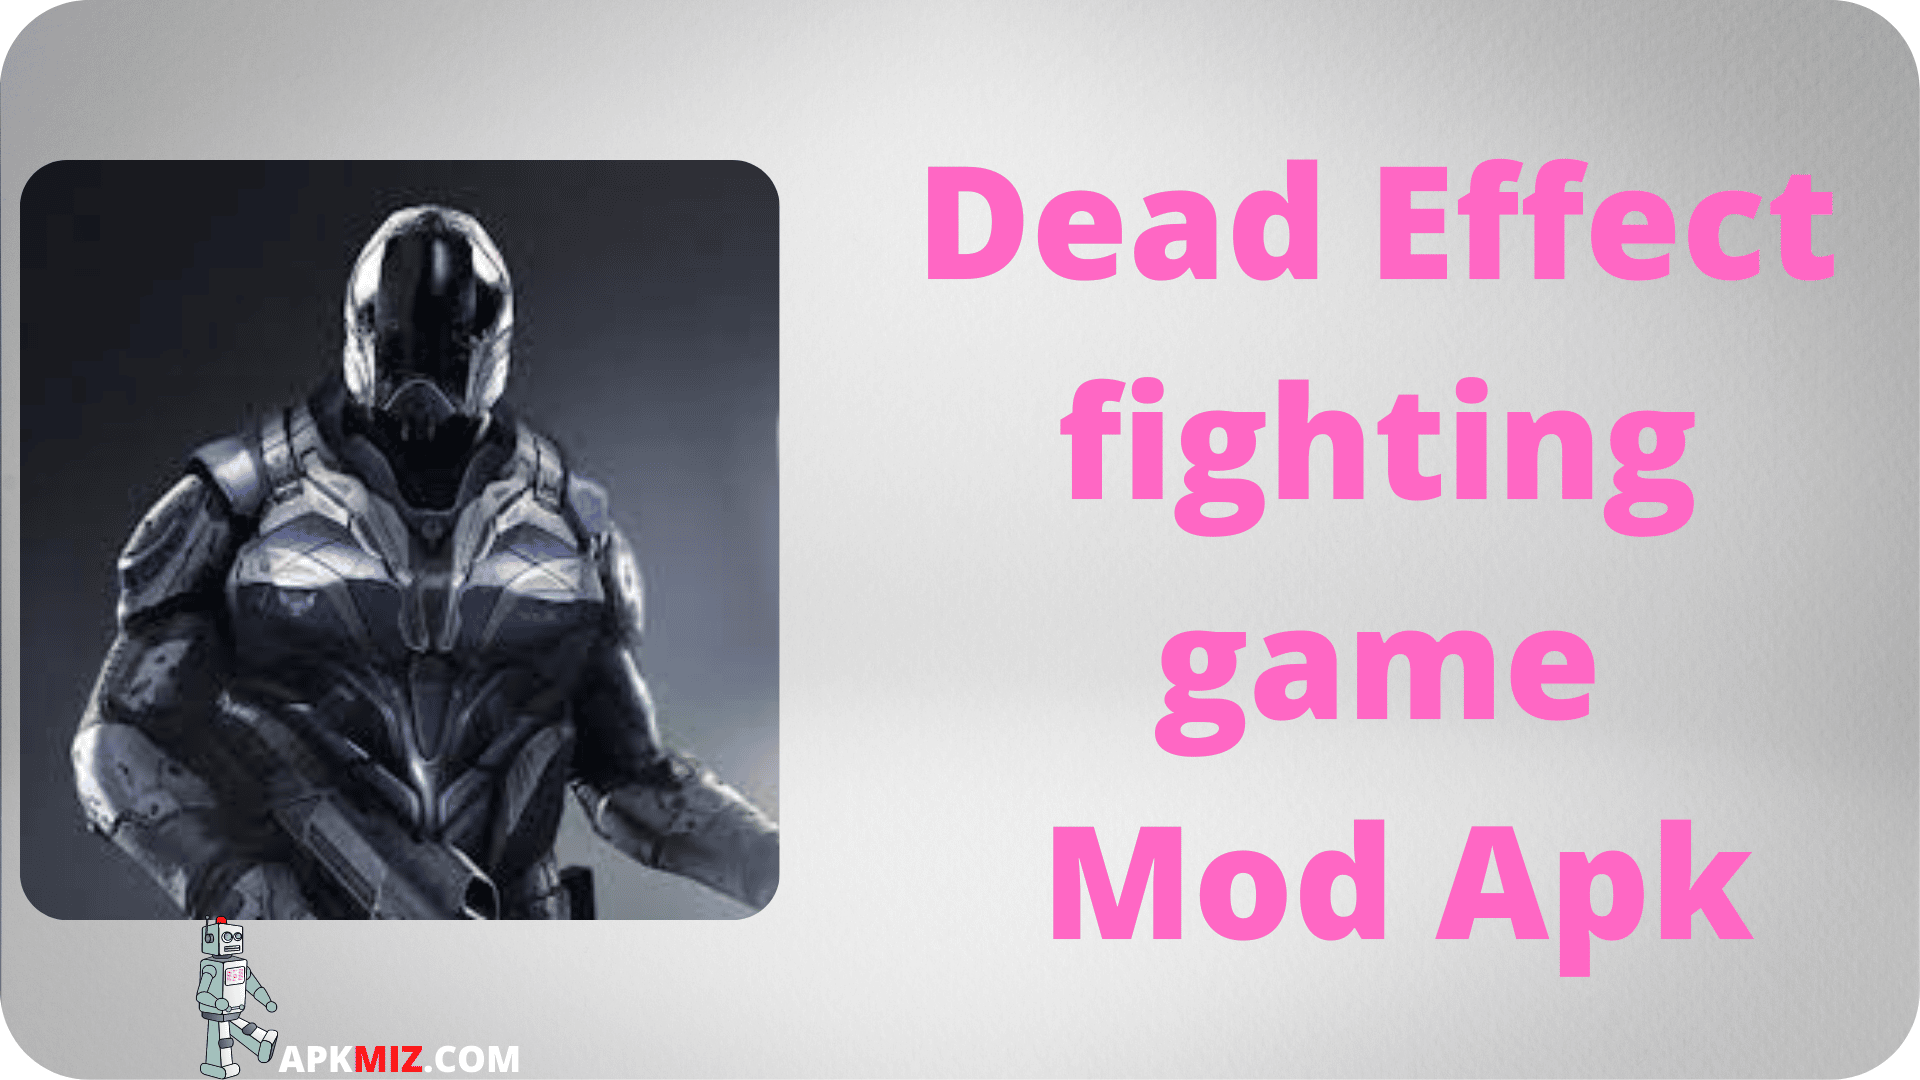 Dead Effect fighting game Mod Apk